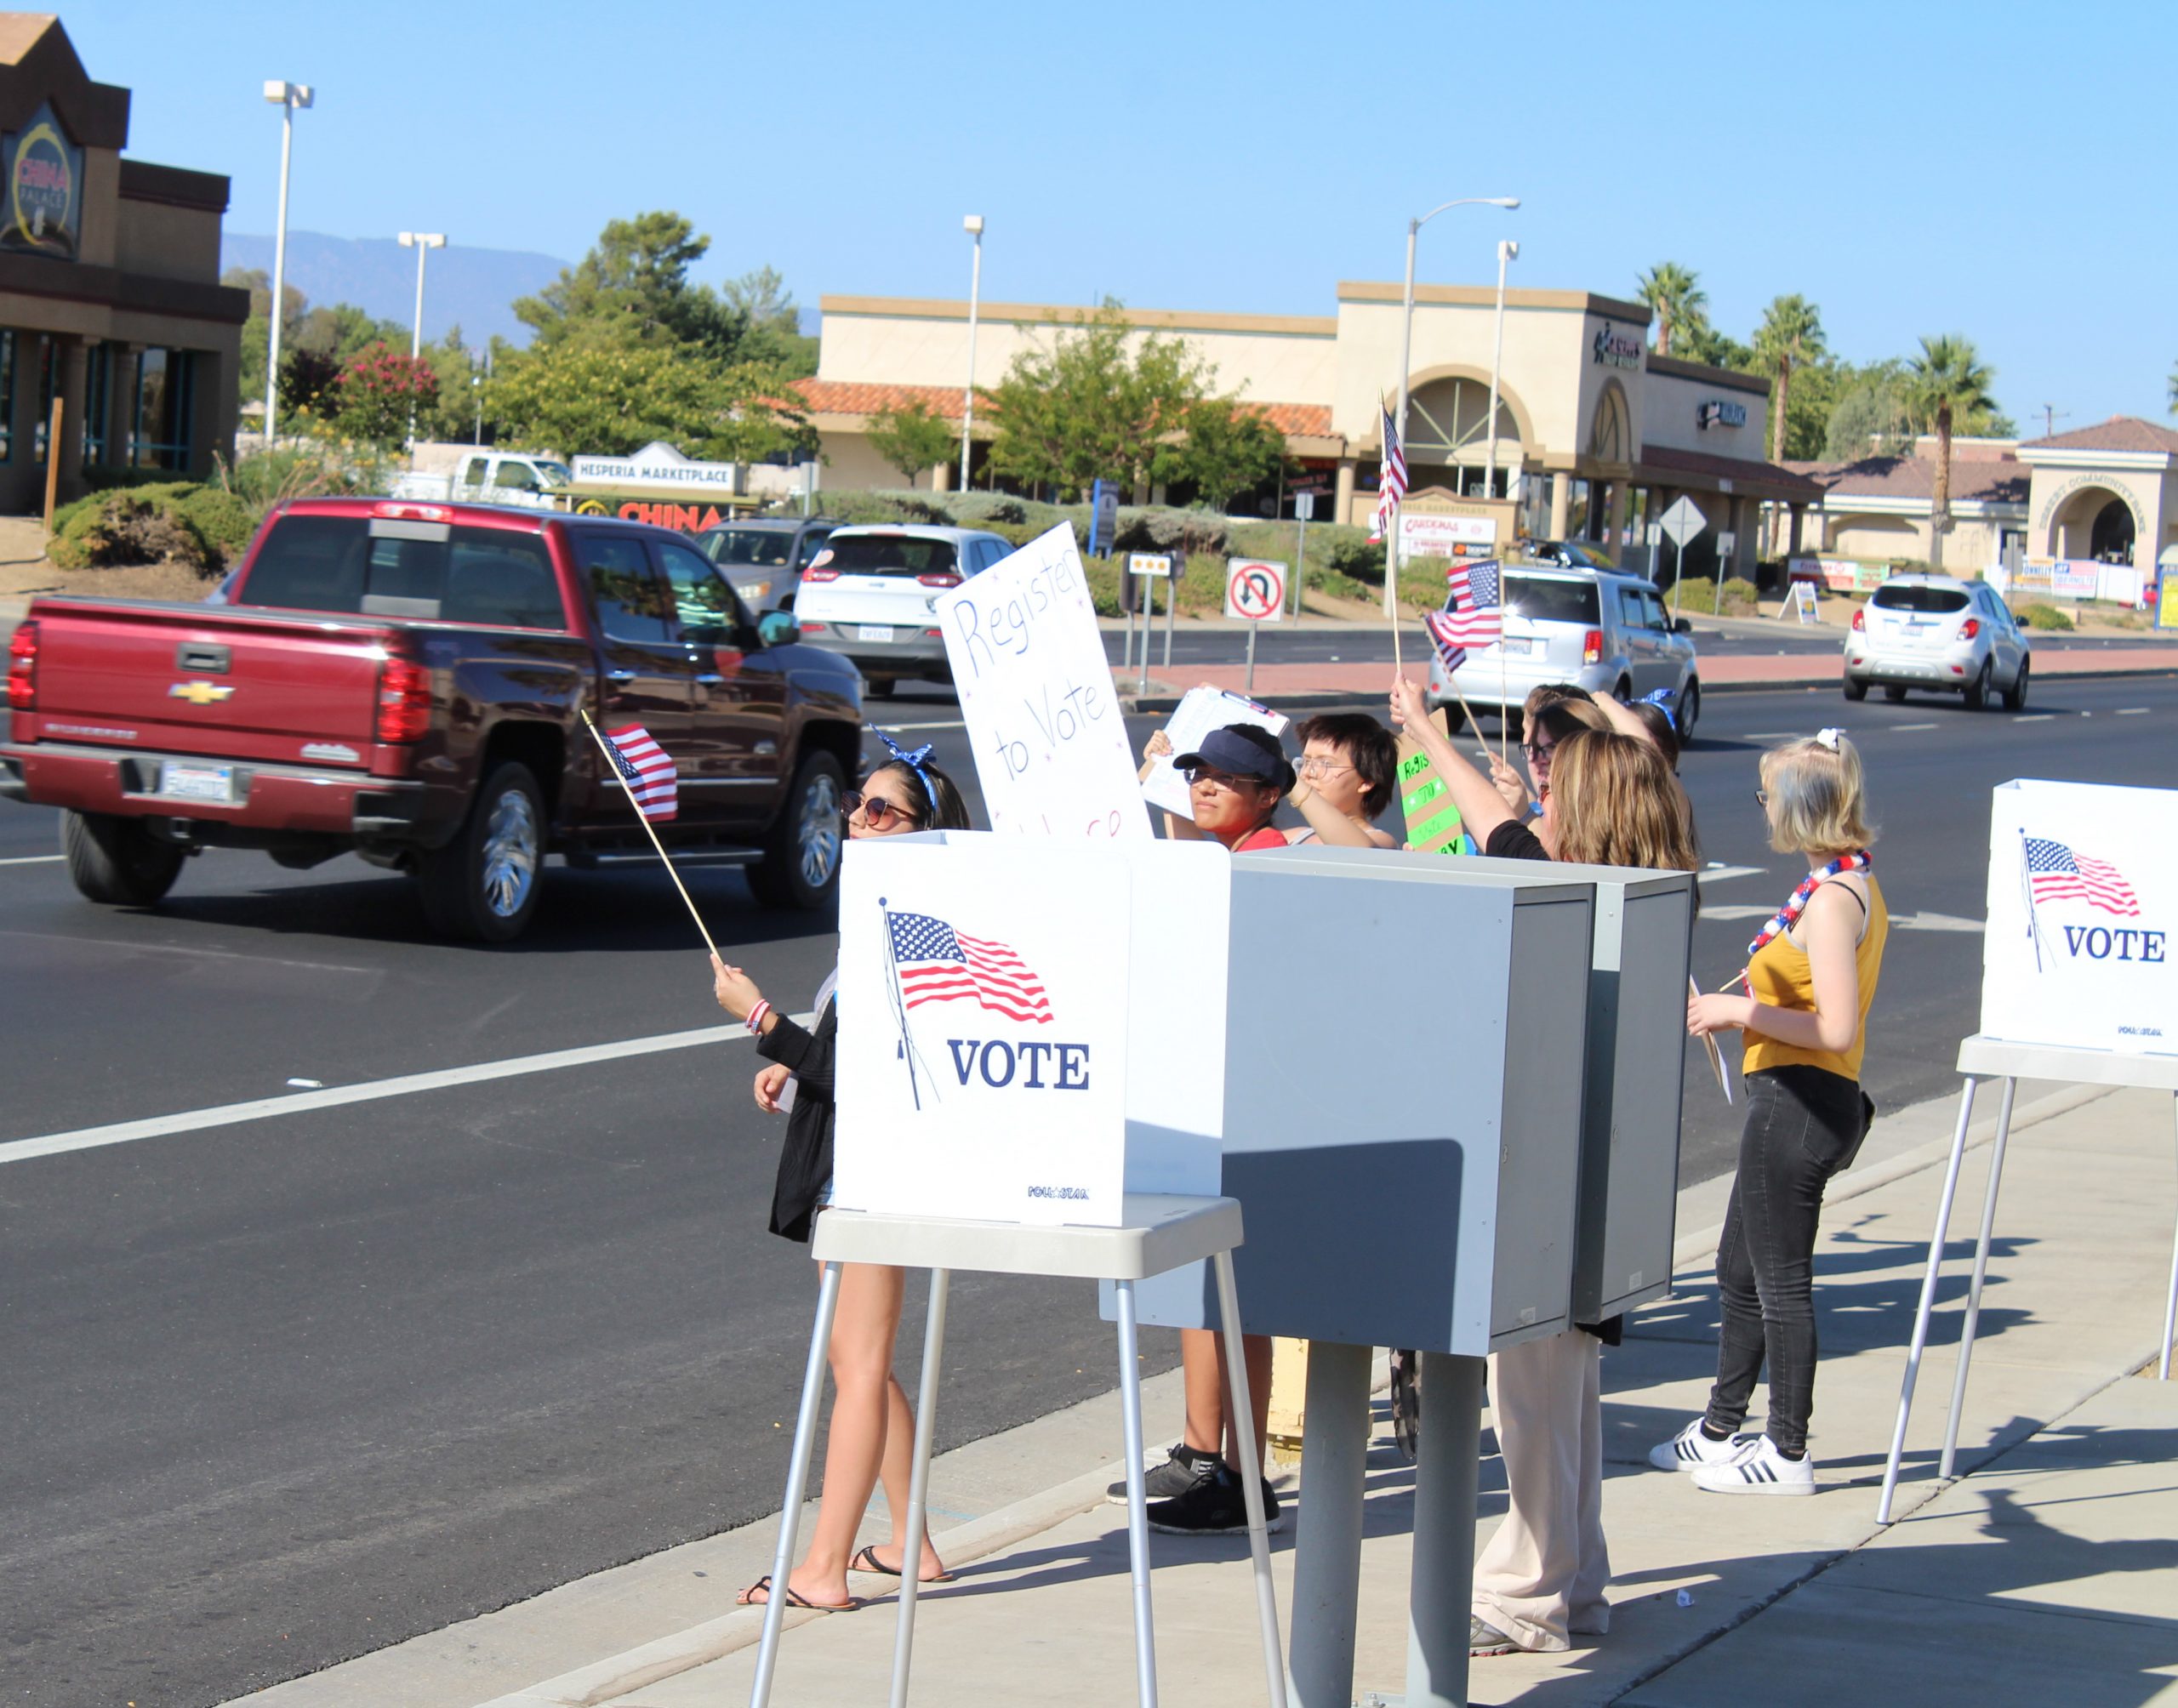 High School students promoting voter registration on the sidewalk